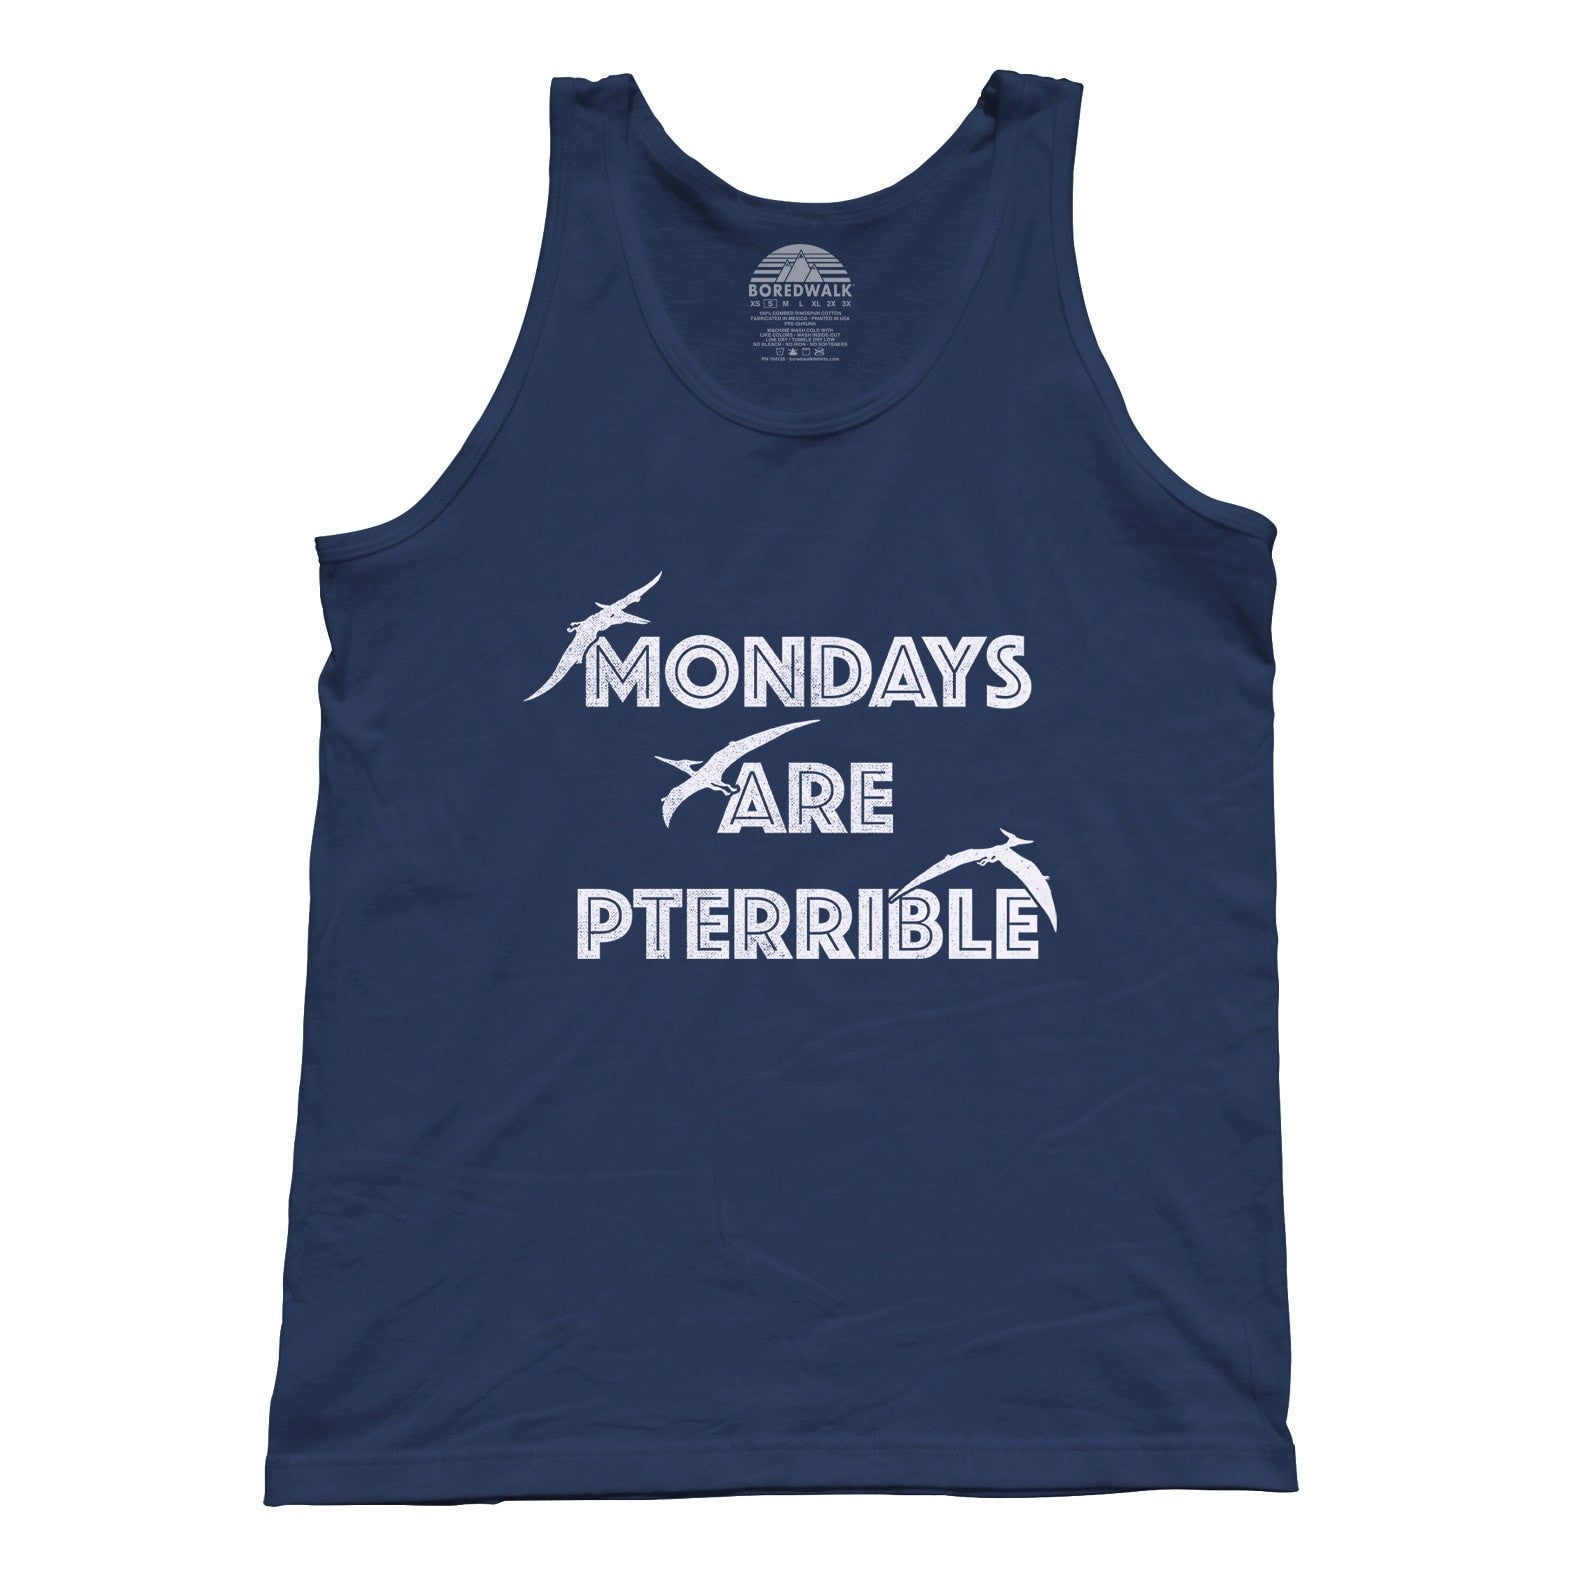 Unisex Mondays Are Pterrible Tank Top - Funny Dinosaur Shirt